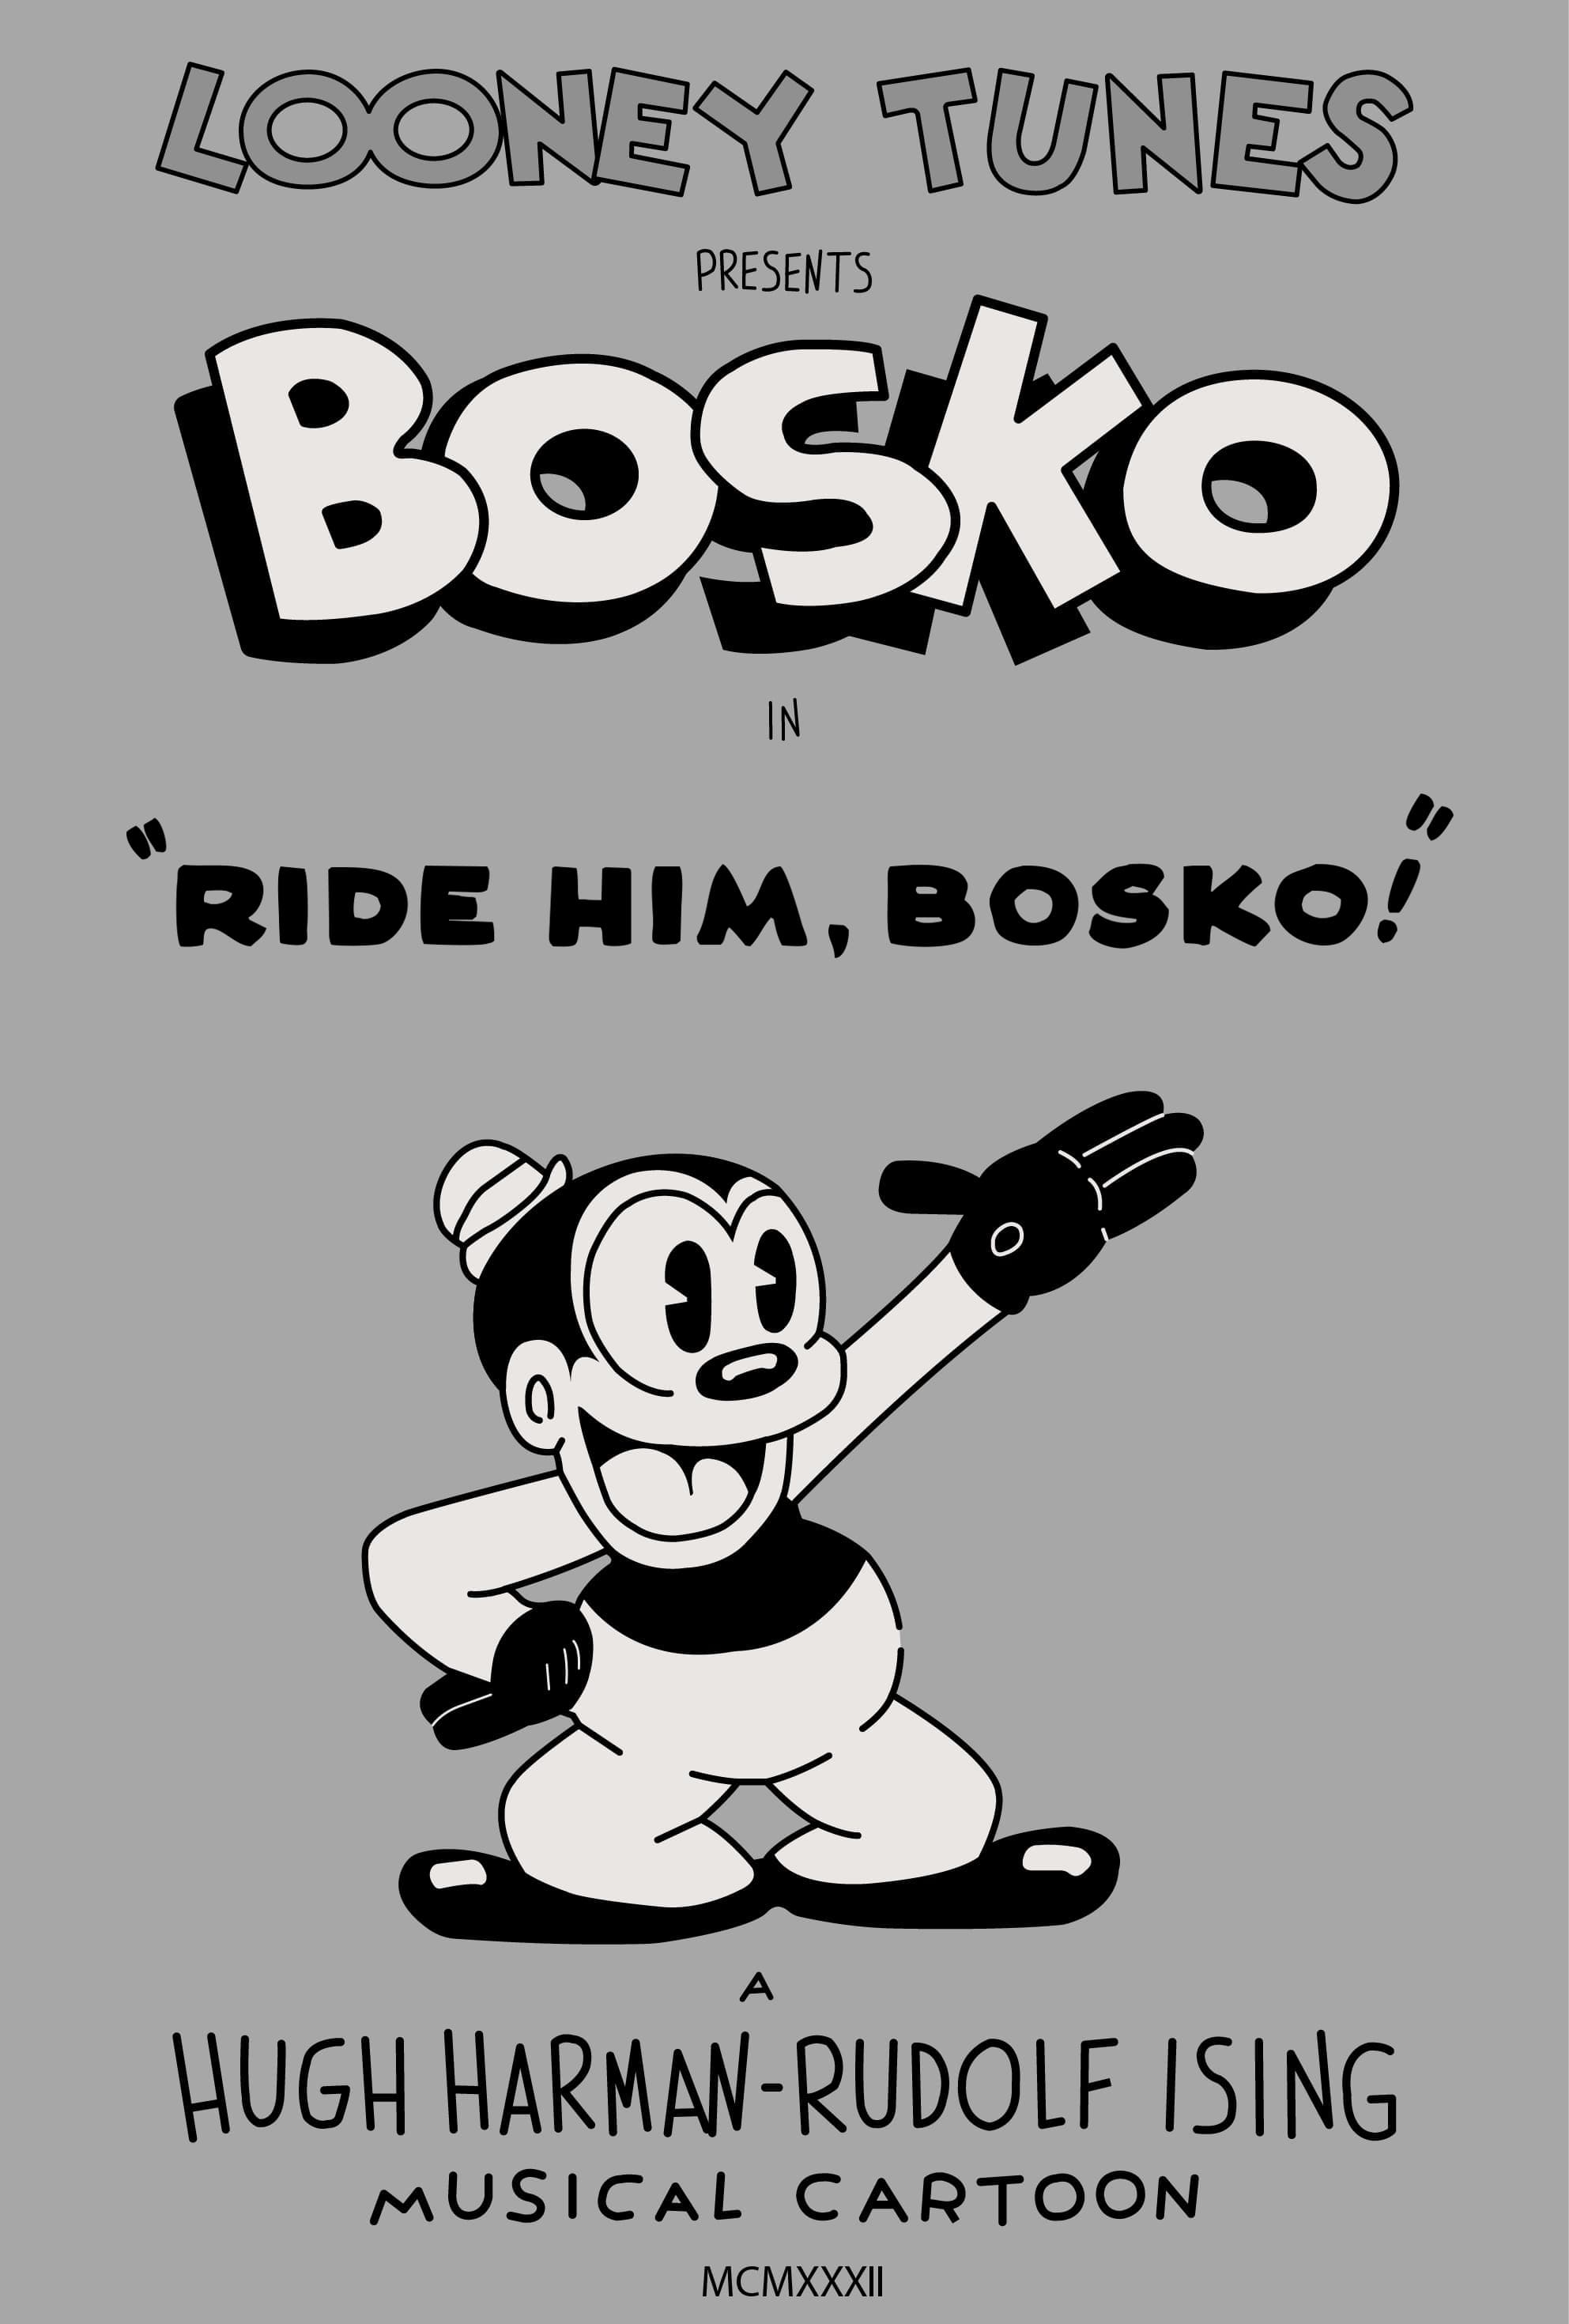 Ride Him, Bosko (1932)